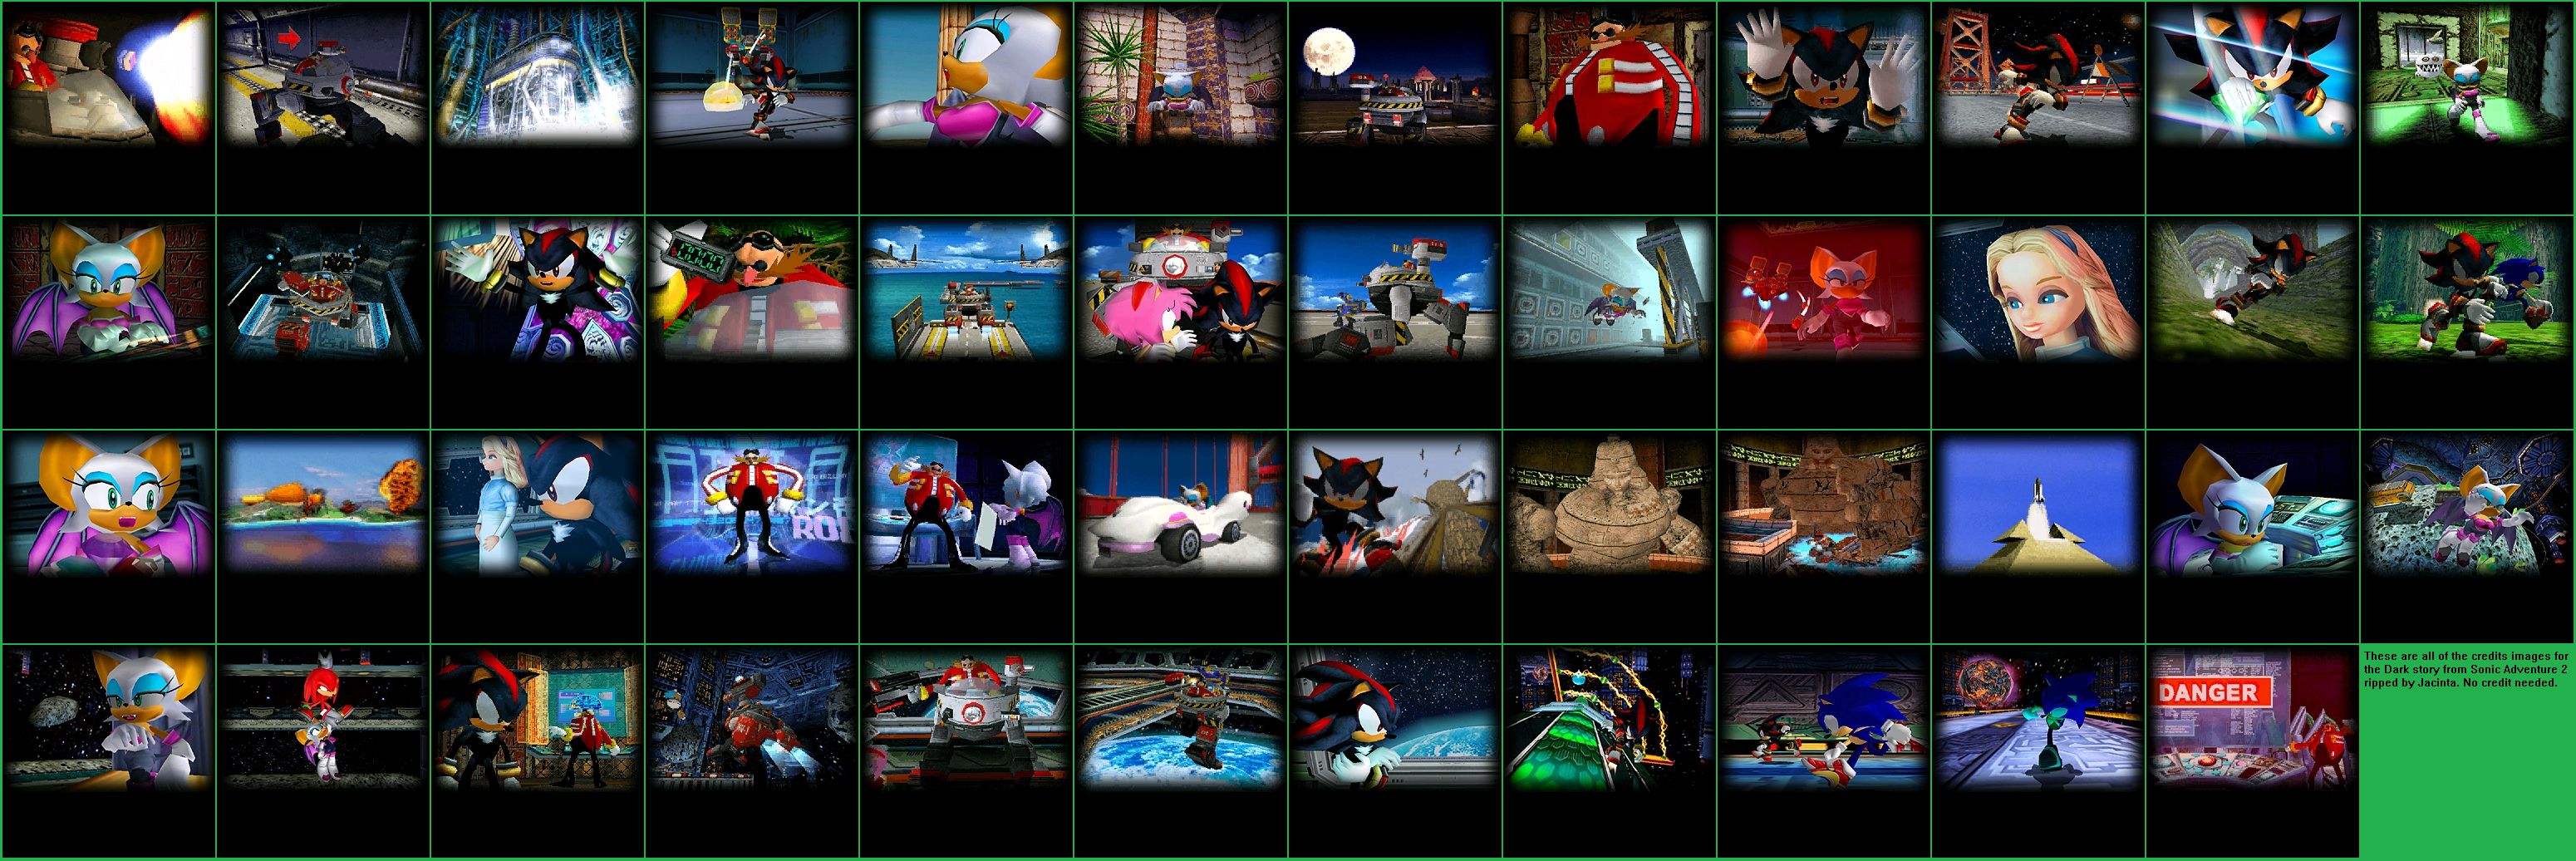 Sonic Adventure 2 - Credits Images (Dark Story)